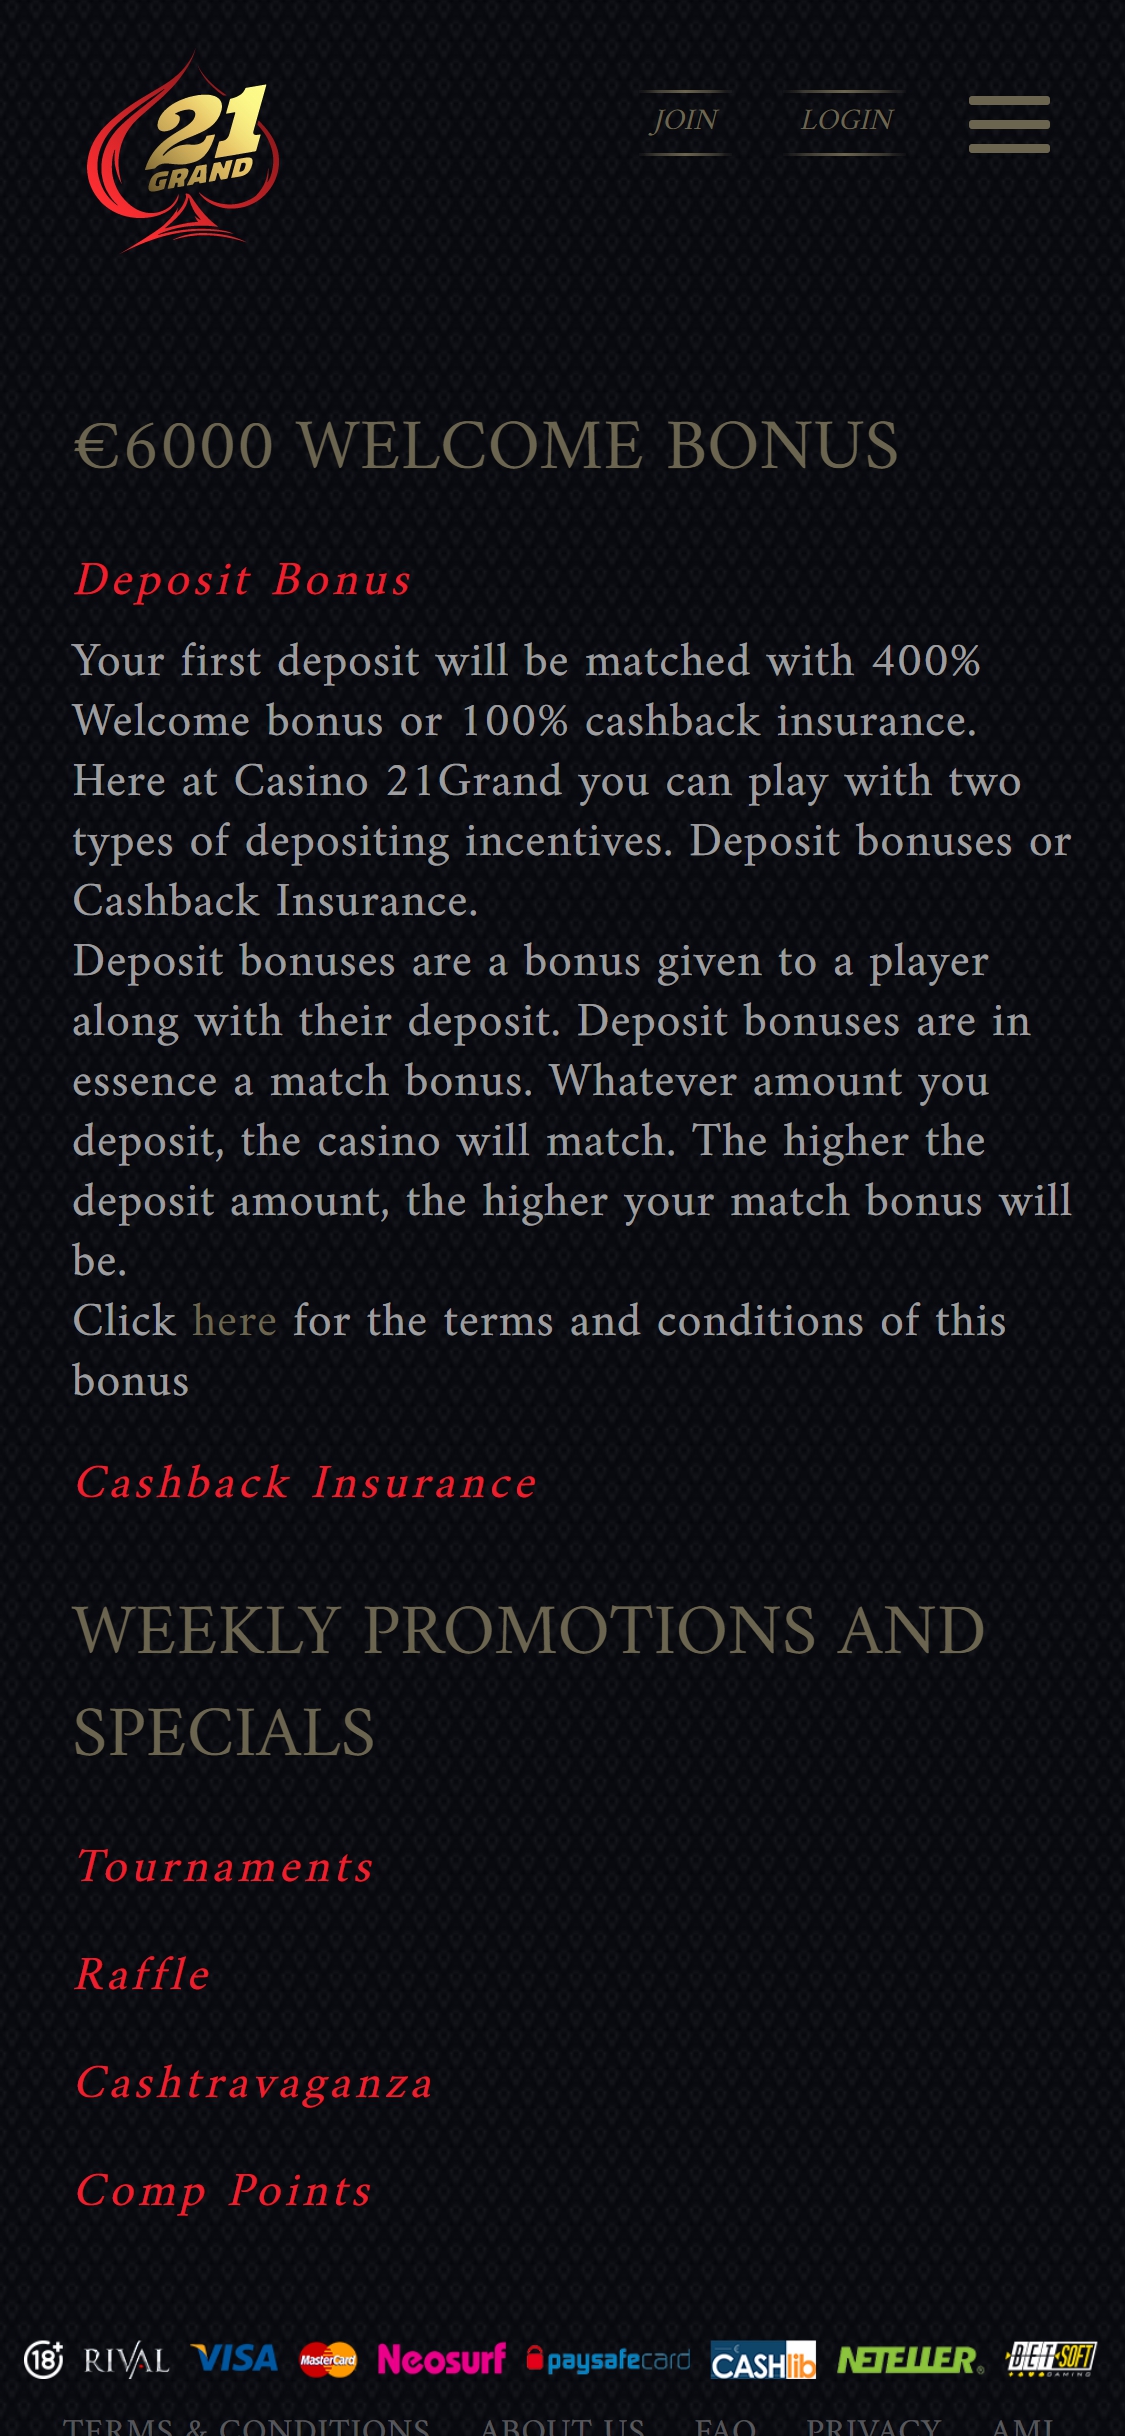 21 Grand Casino Mobile No Deposit Bonus Review